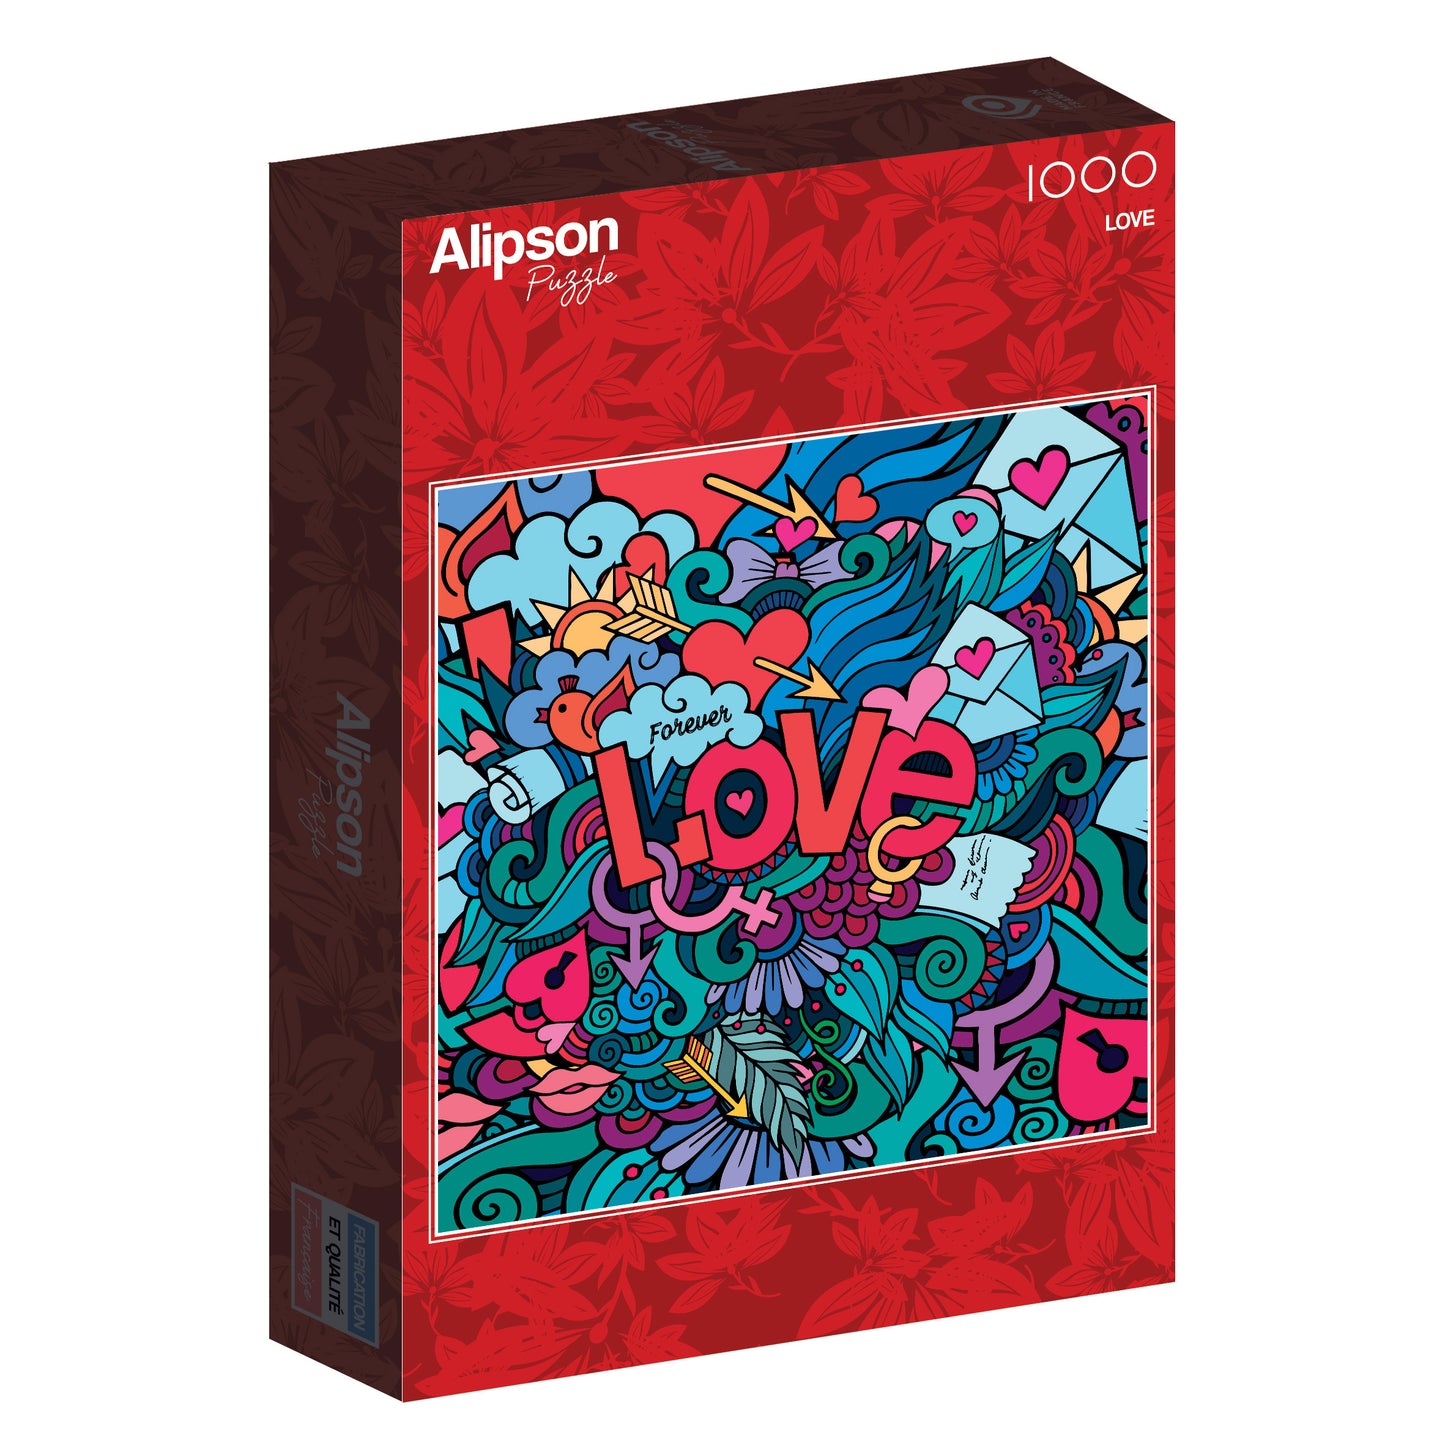 Alipson - Love - 1000 Piece Jigsaw Puzzle